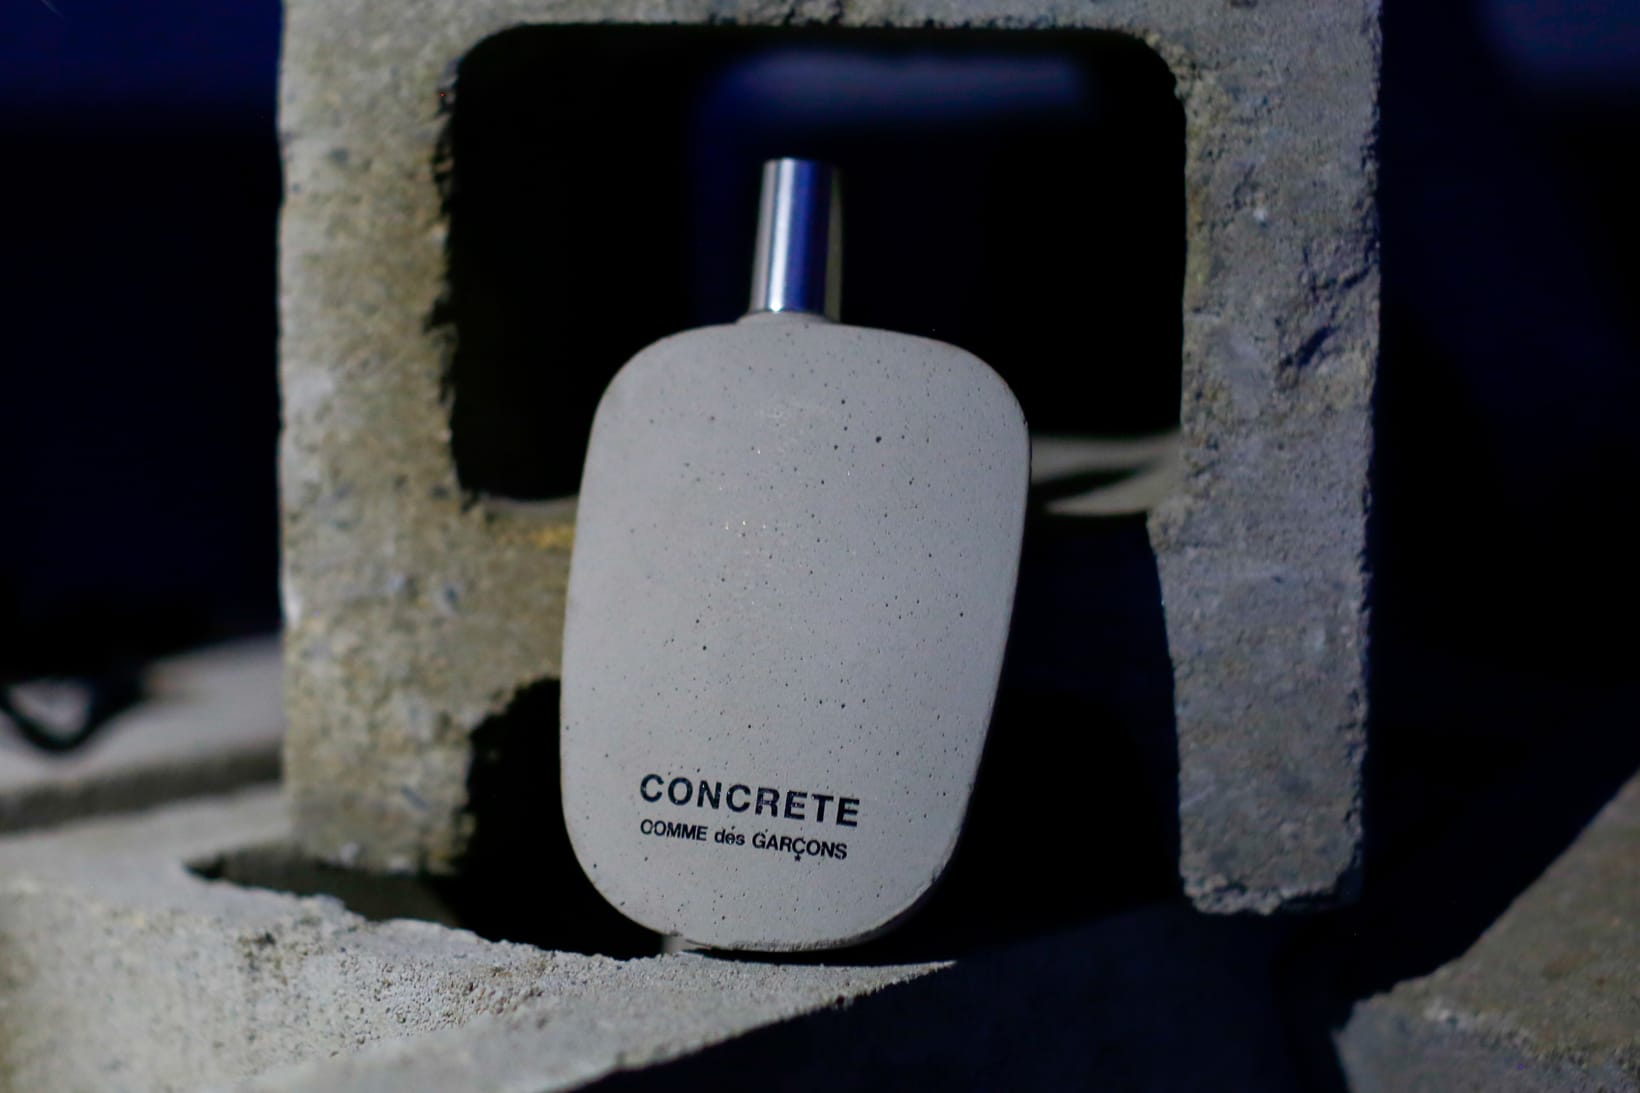 cdg concrete perfume